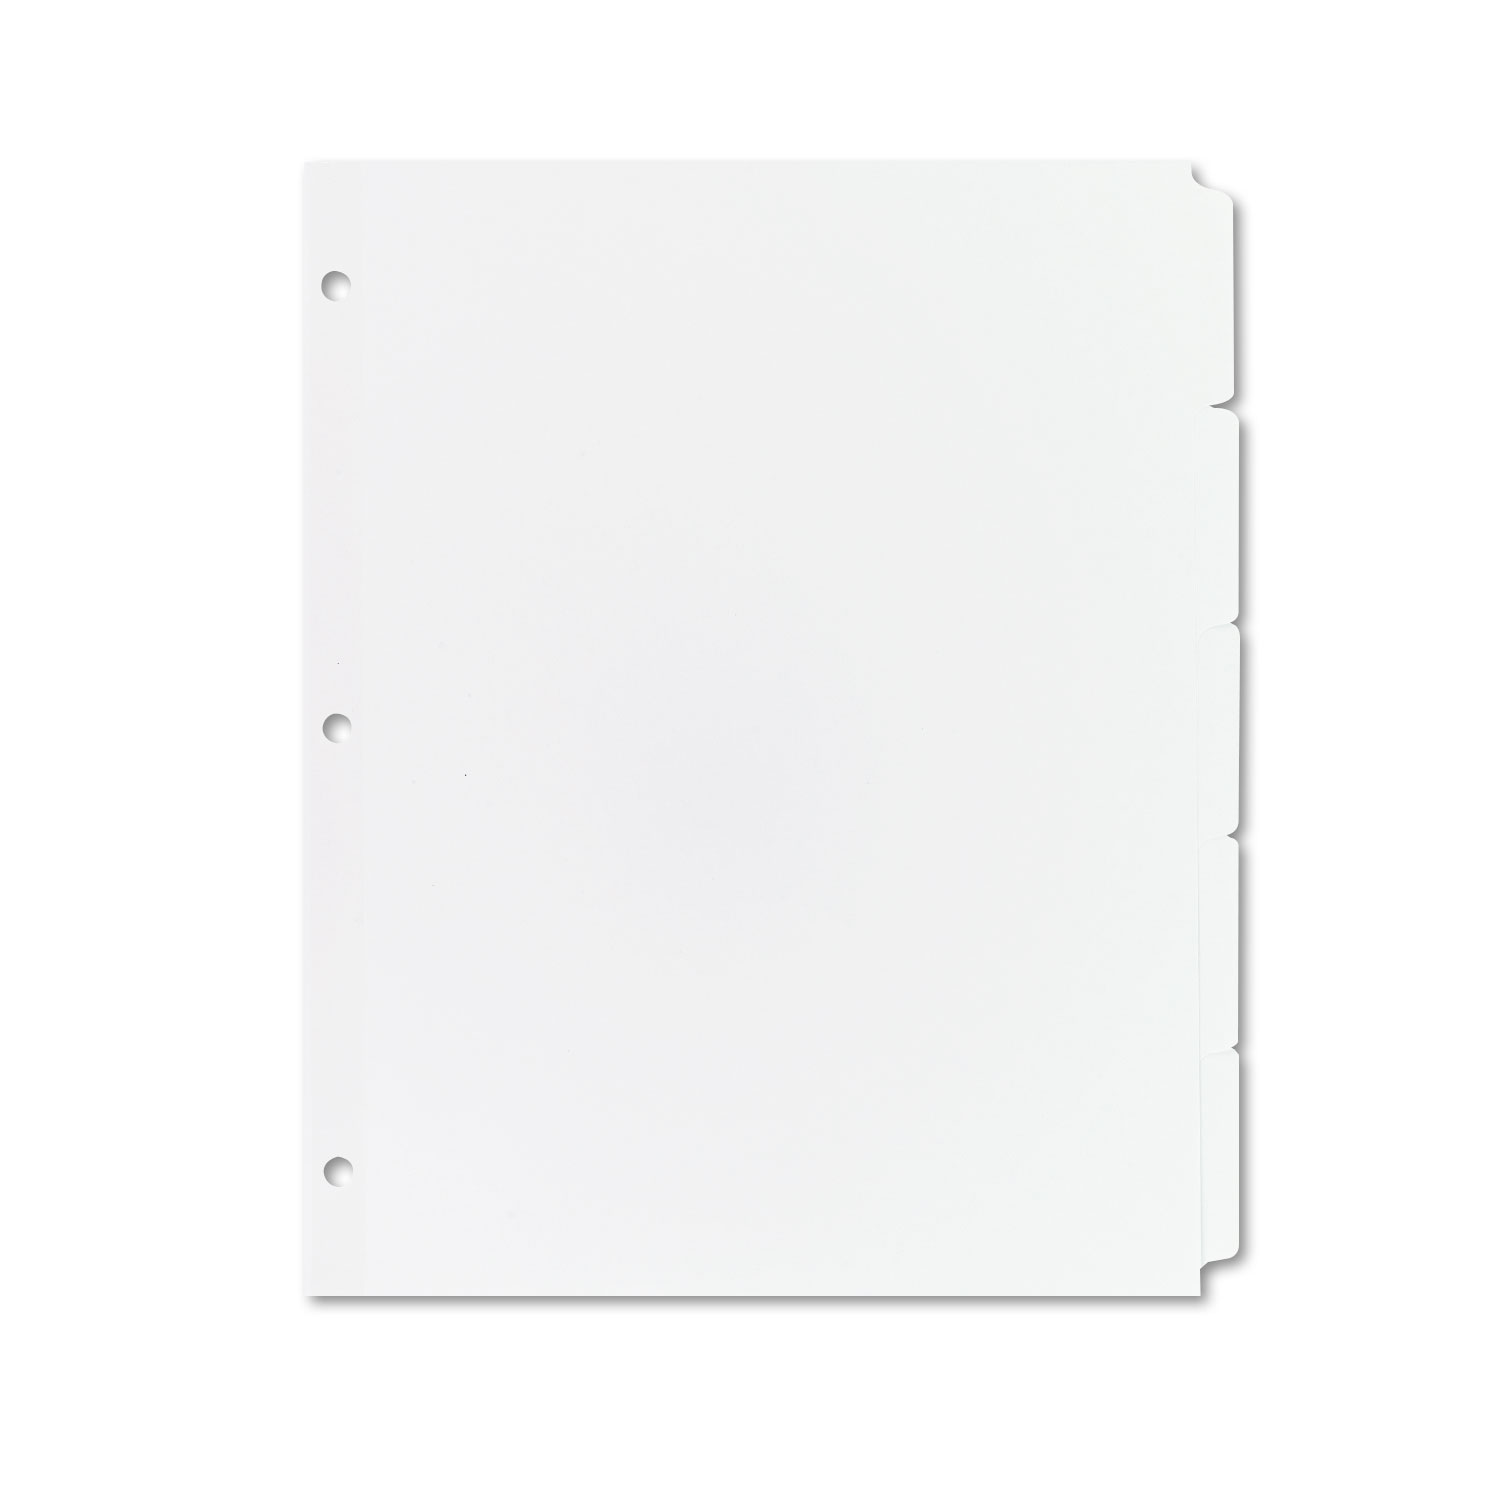  Avery 11506 Write & Erase Plain-Tab Paper Dividers, 5-Tab, Letter, White, 36 Sets (AVE11506) 